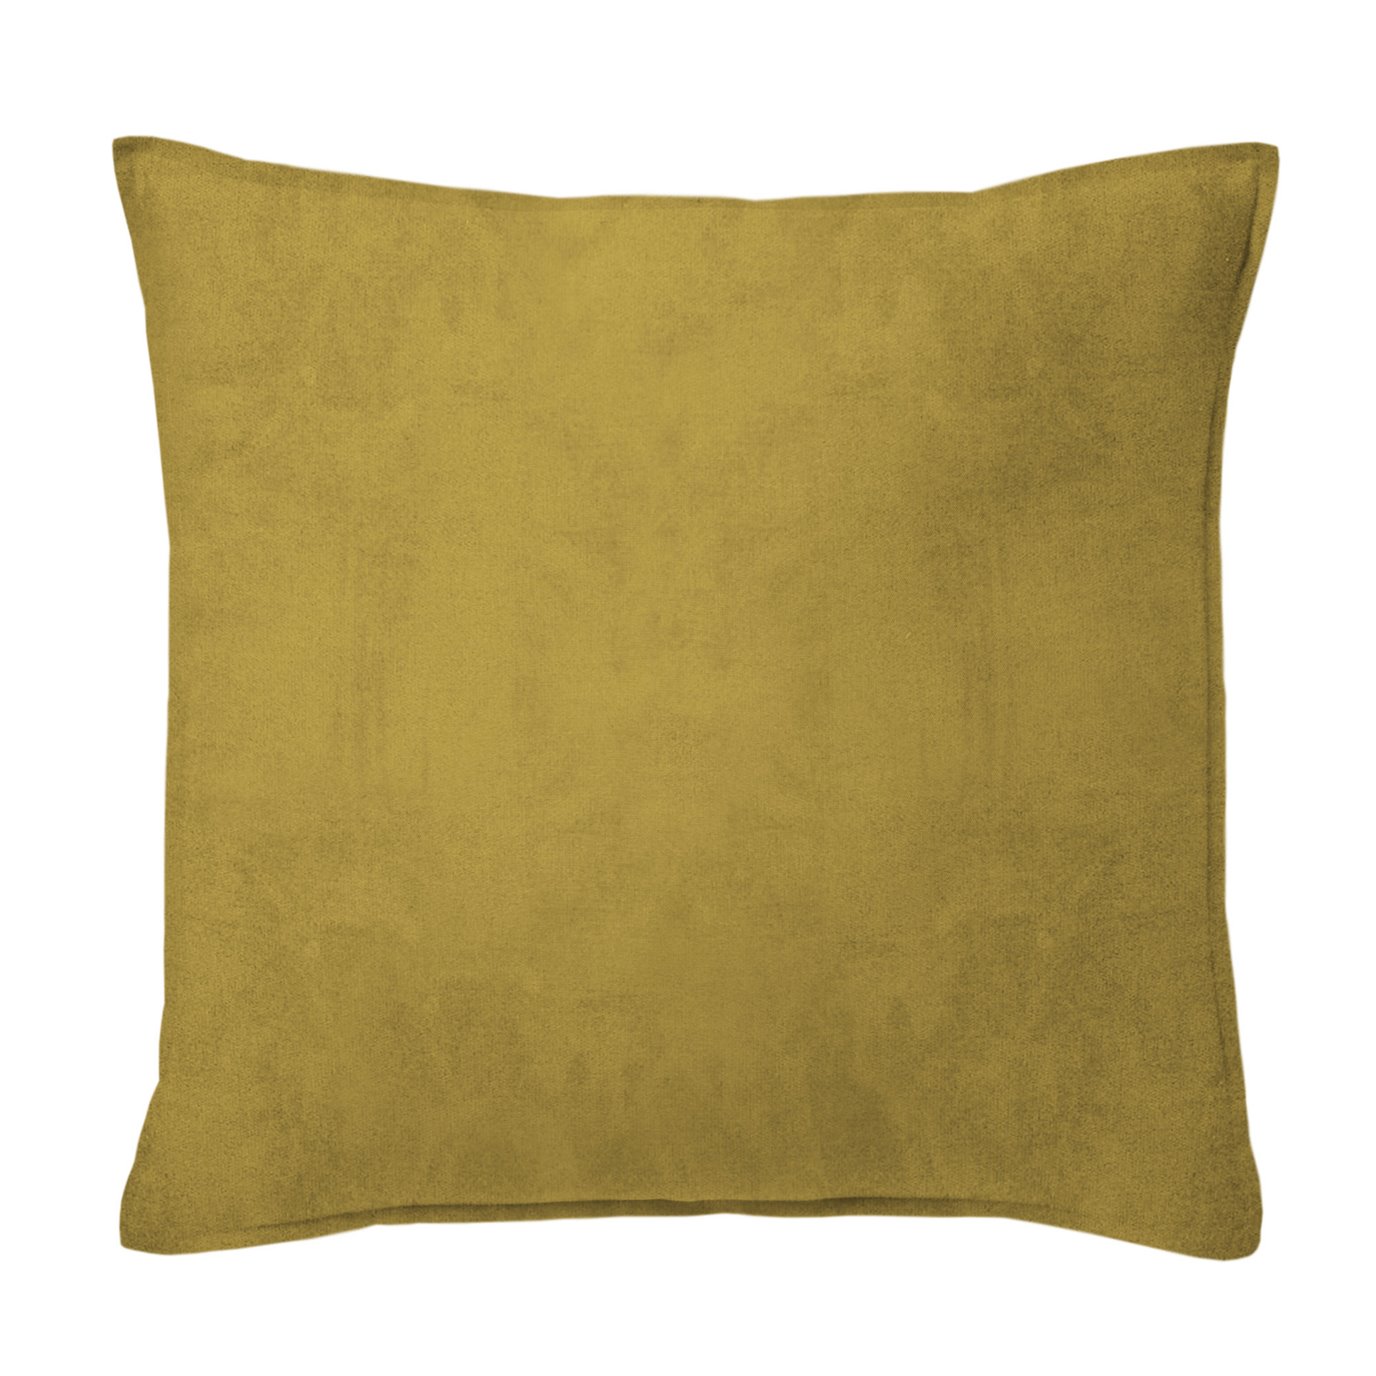 Vanessa Curry Decorative Pillow - Size 20" Square